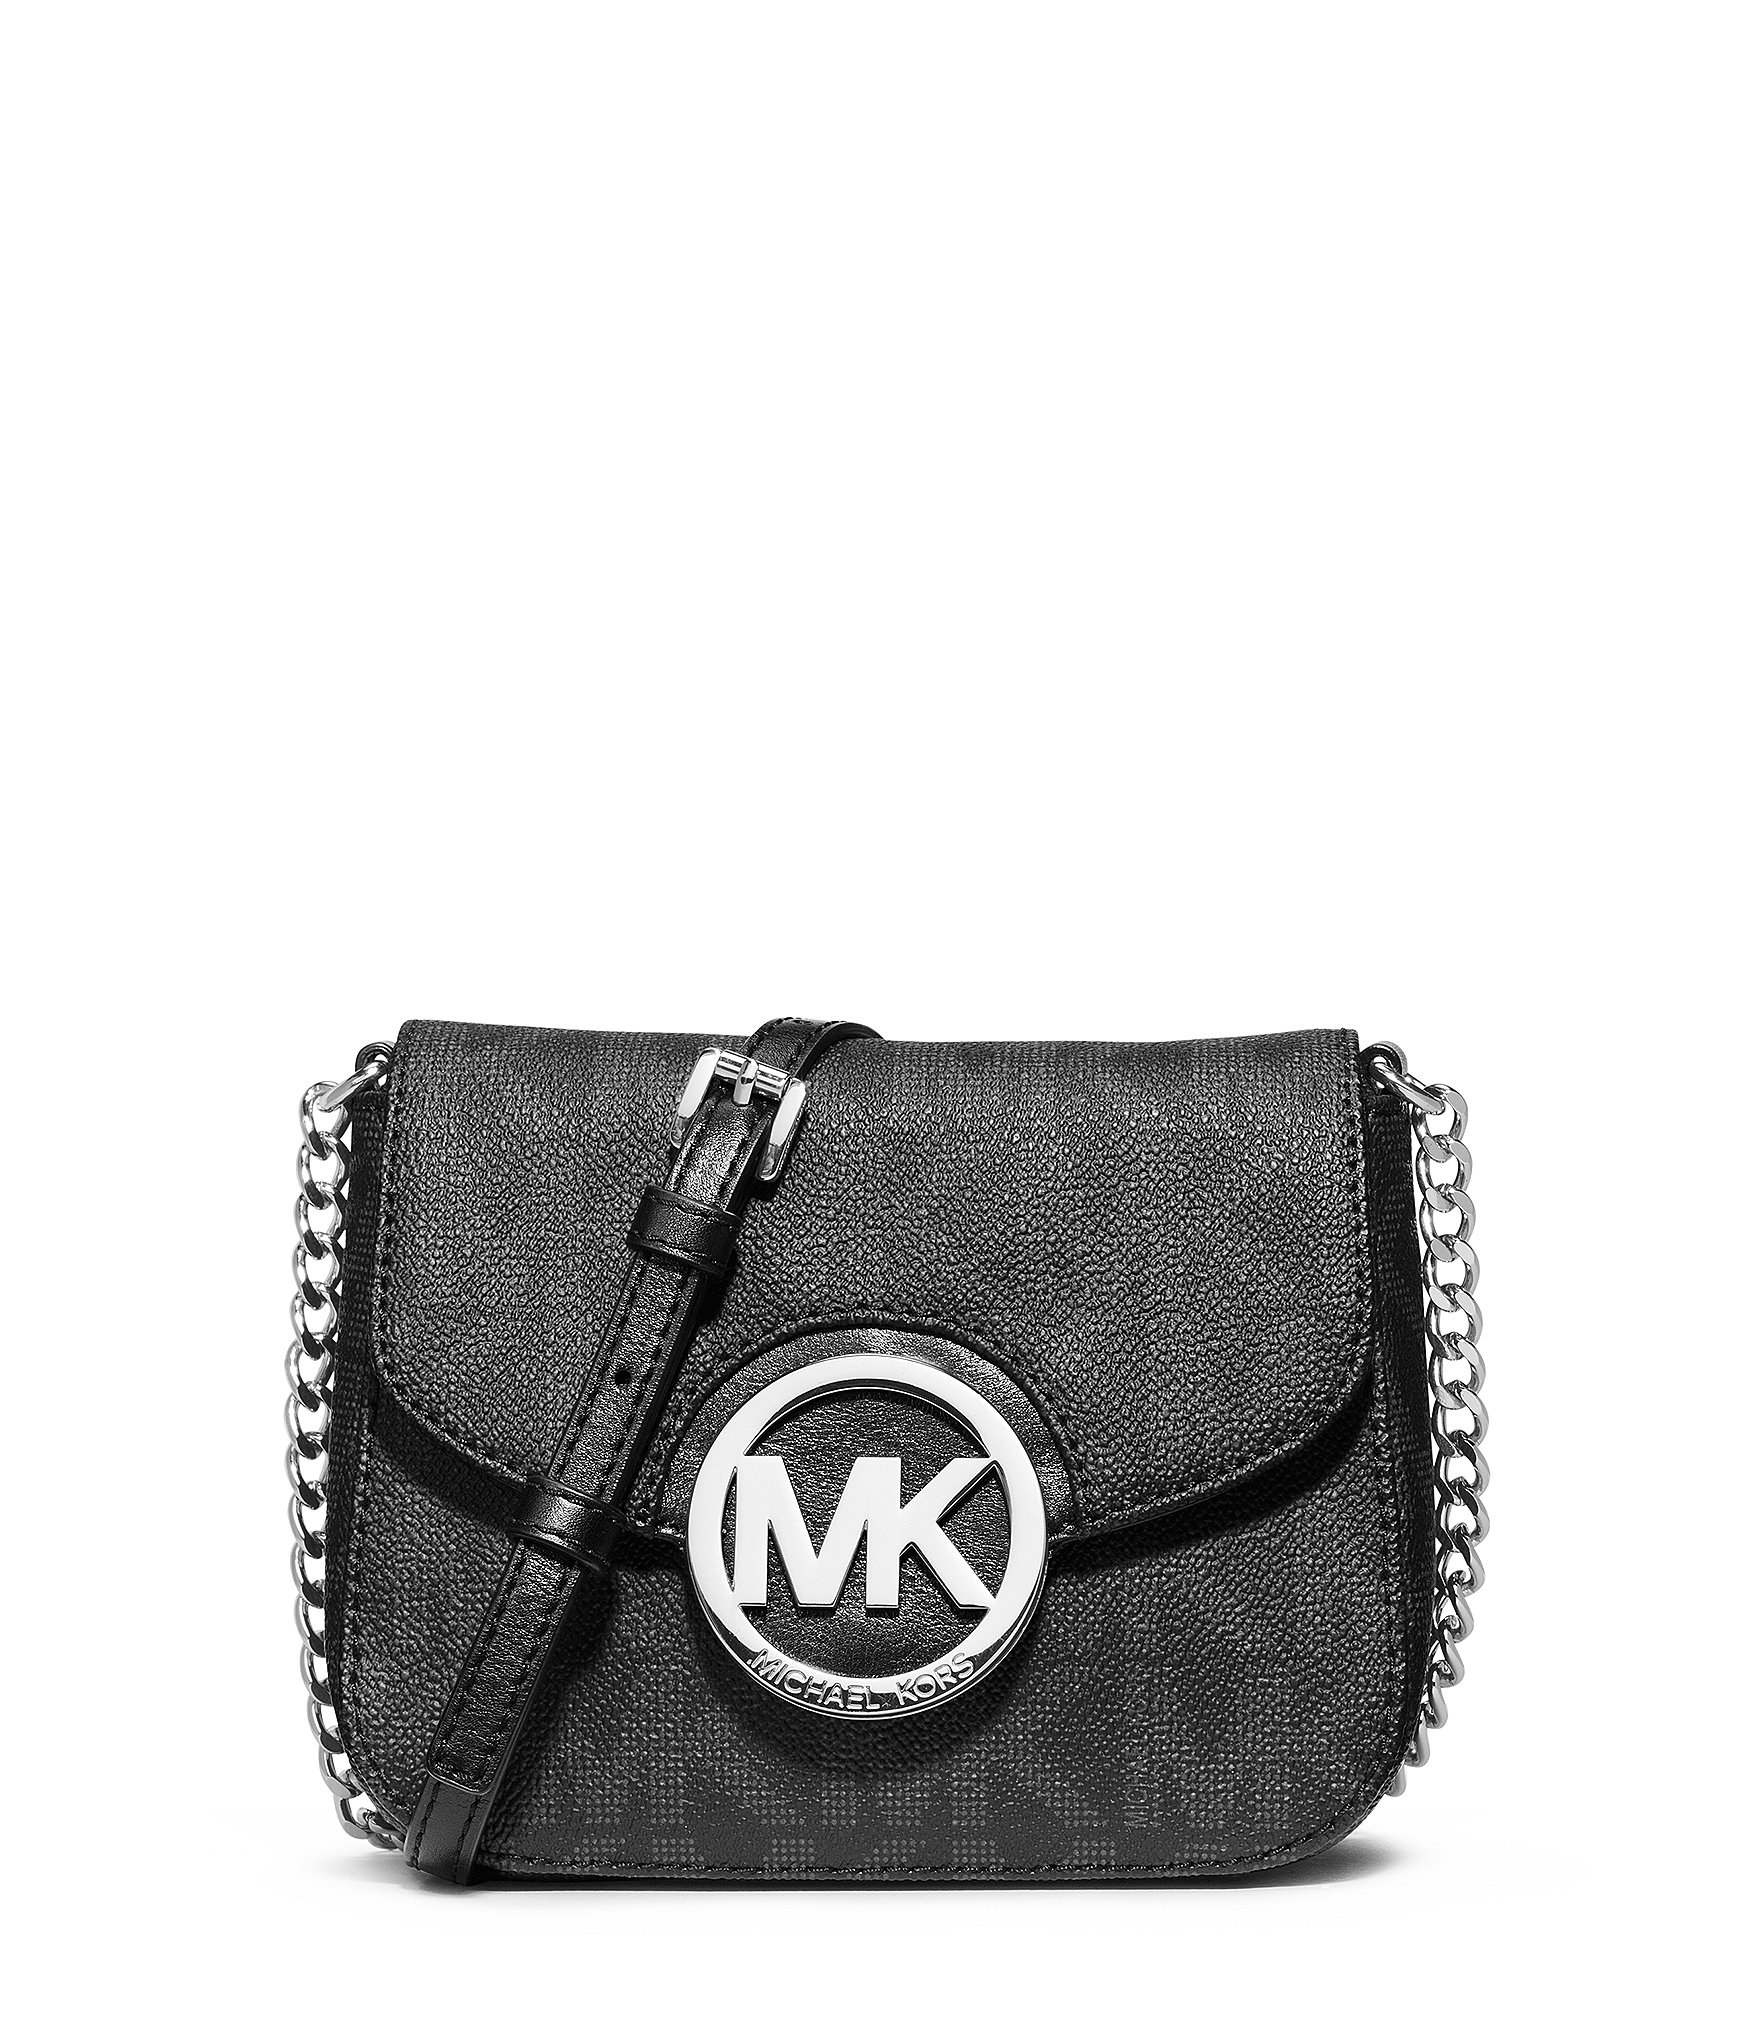 MICHAEL Michael Kors Fulton Signature Small Chain Strap Cross-body Bag in Black - Lyst